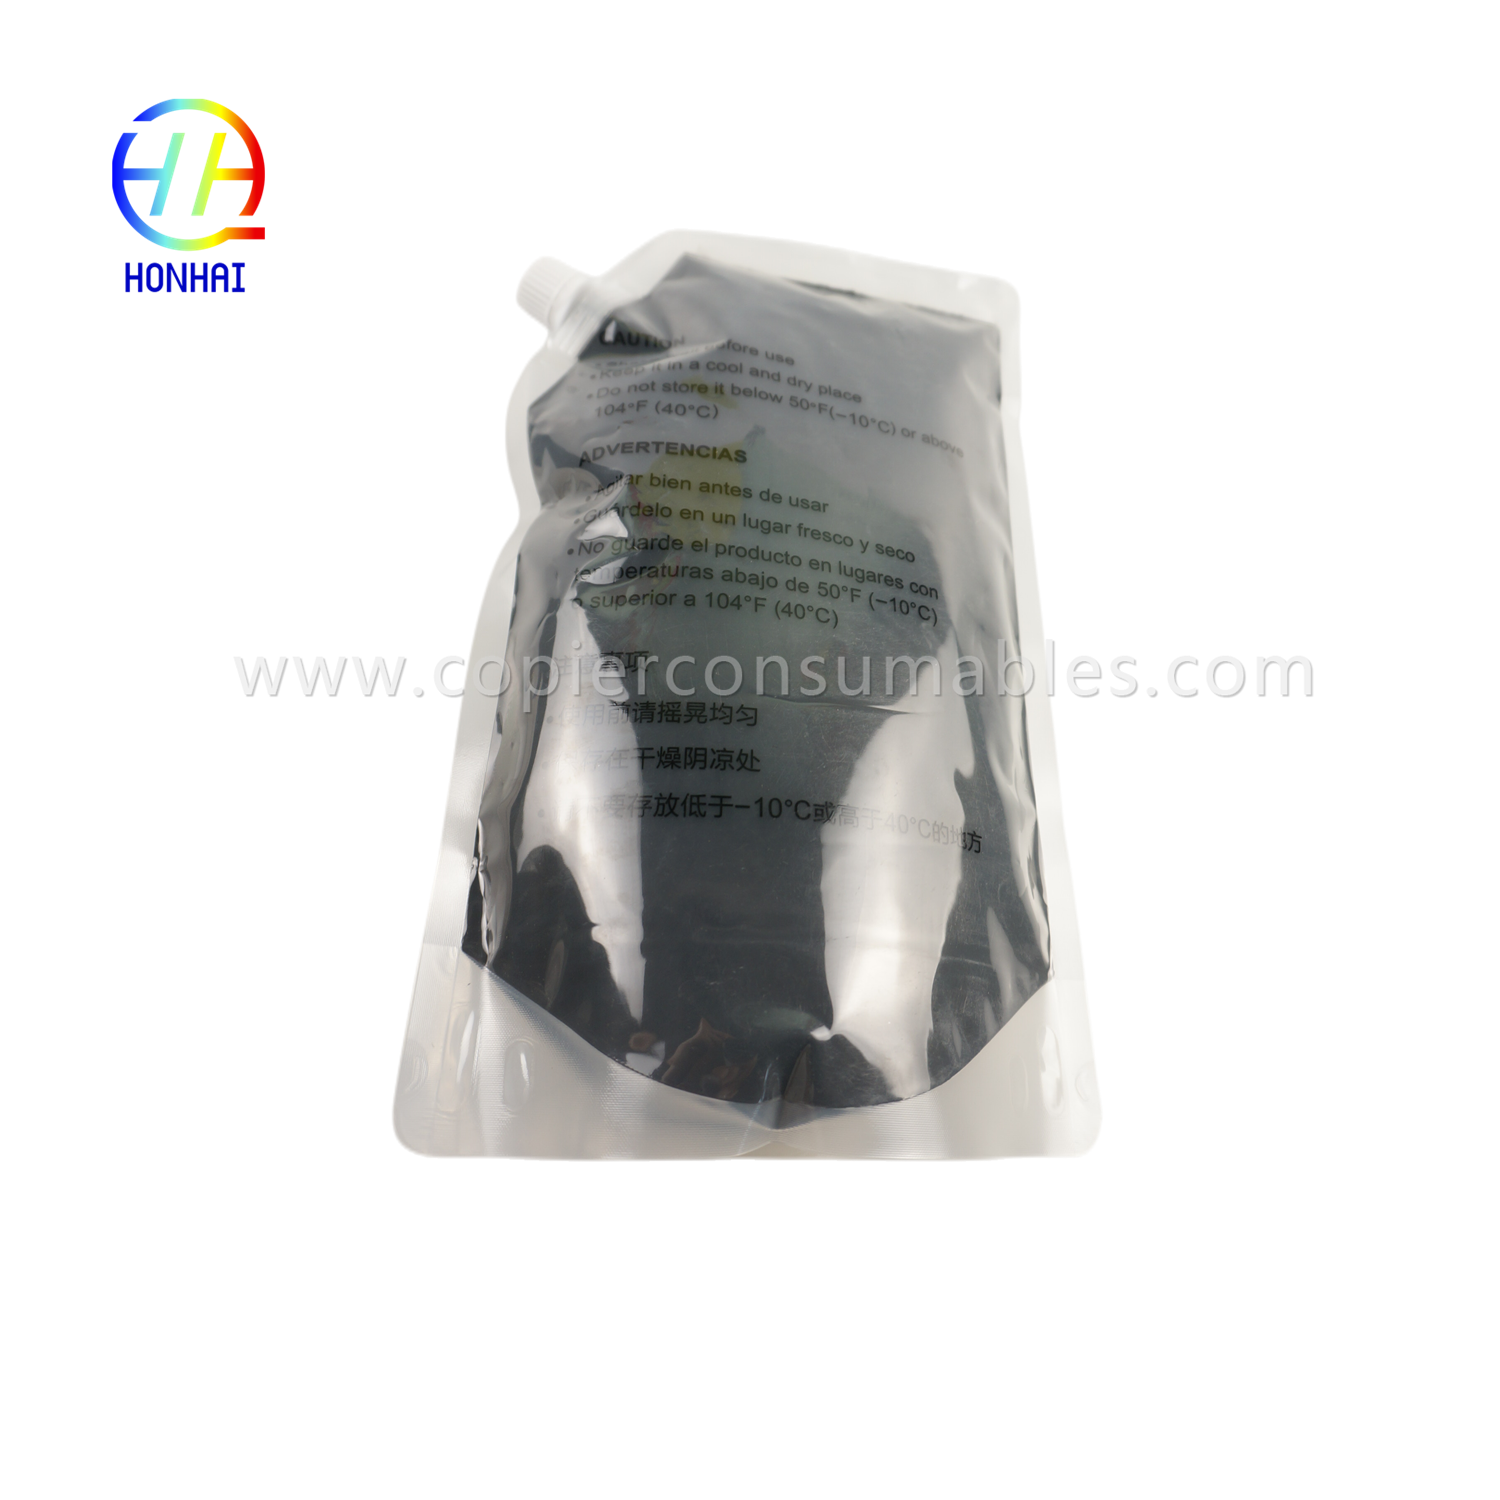 Toner Powder for Ricoh MPC3000 black (1)